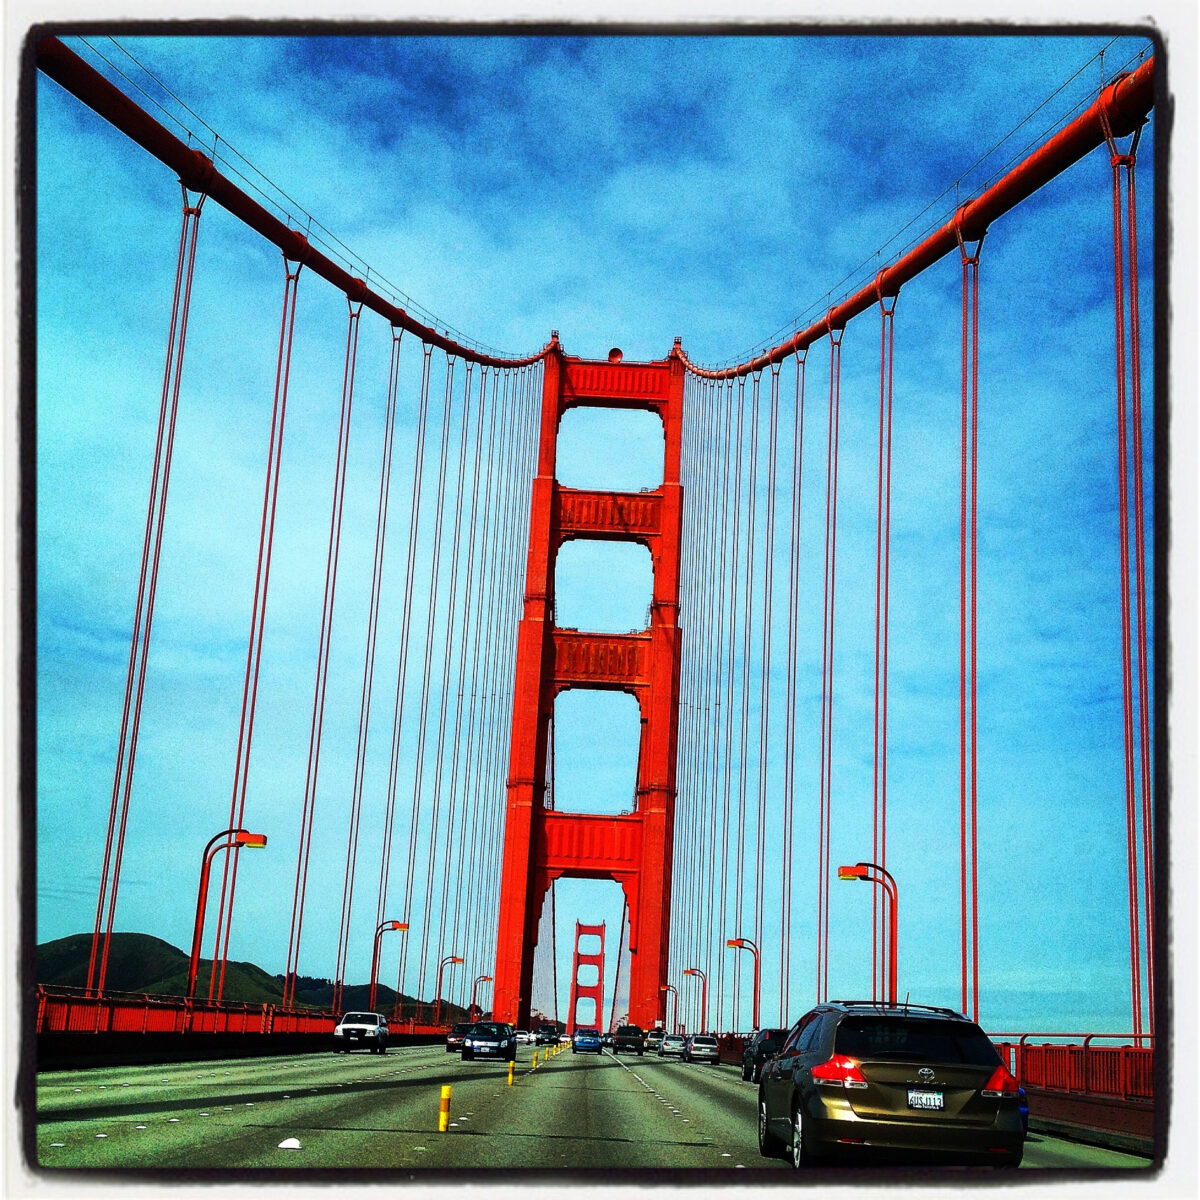 The great Golden Gate Bridge through history